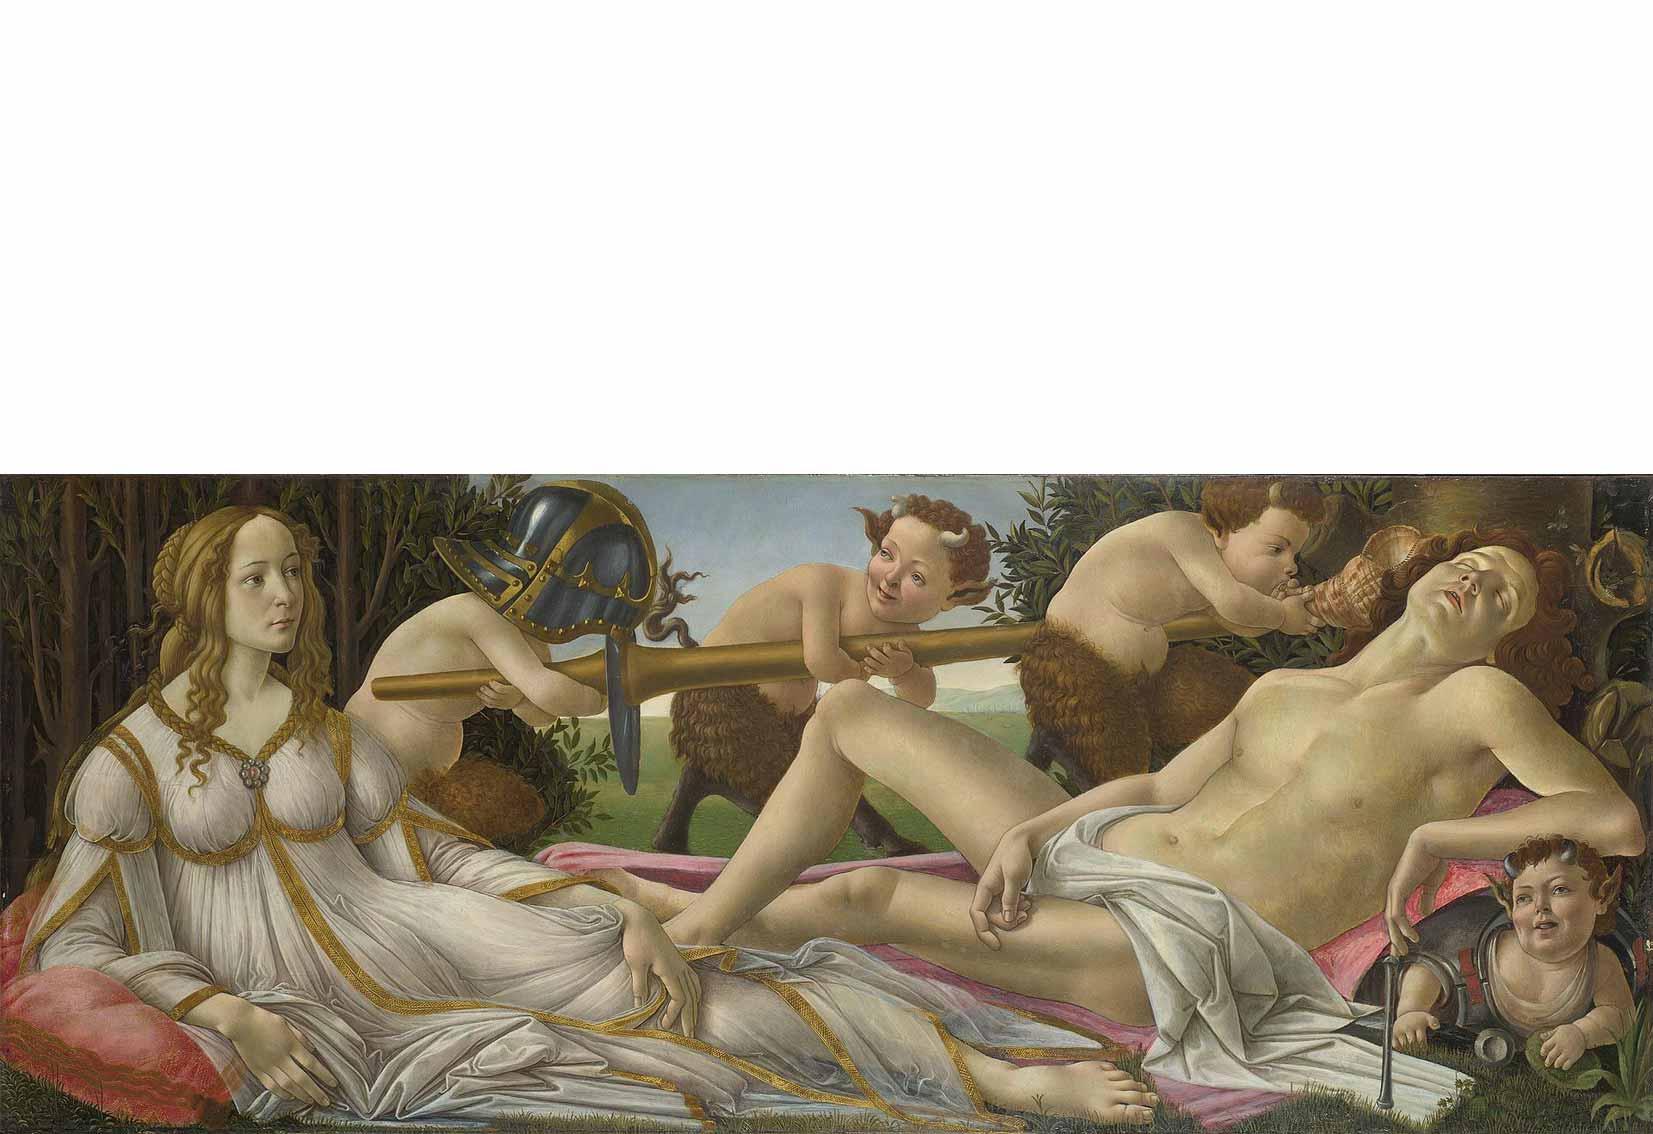 Sandro Botticelli, Venus and Mars, c. 1485.